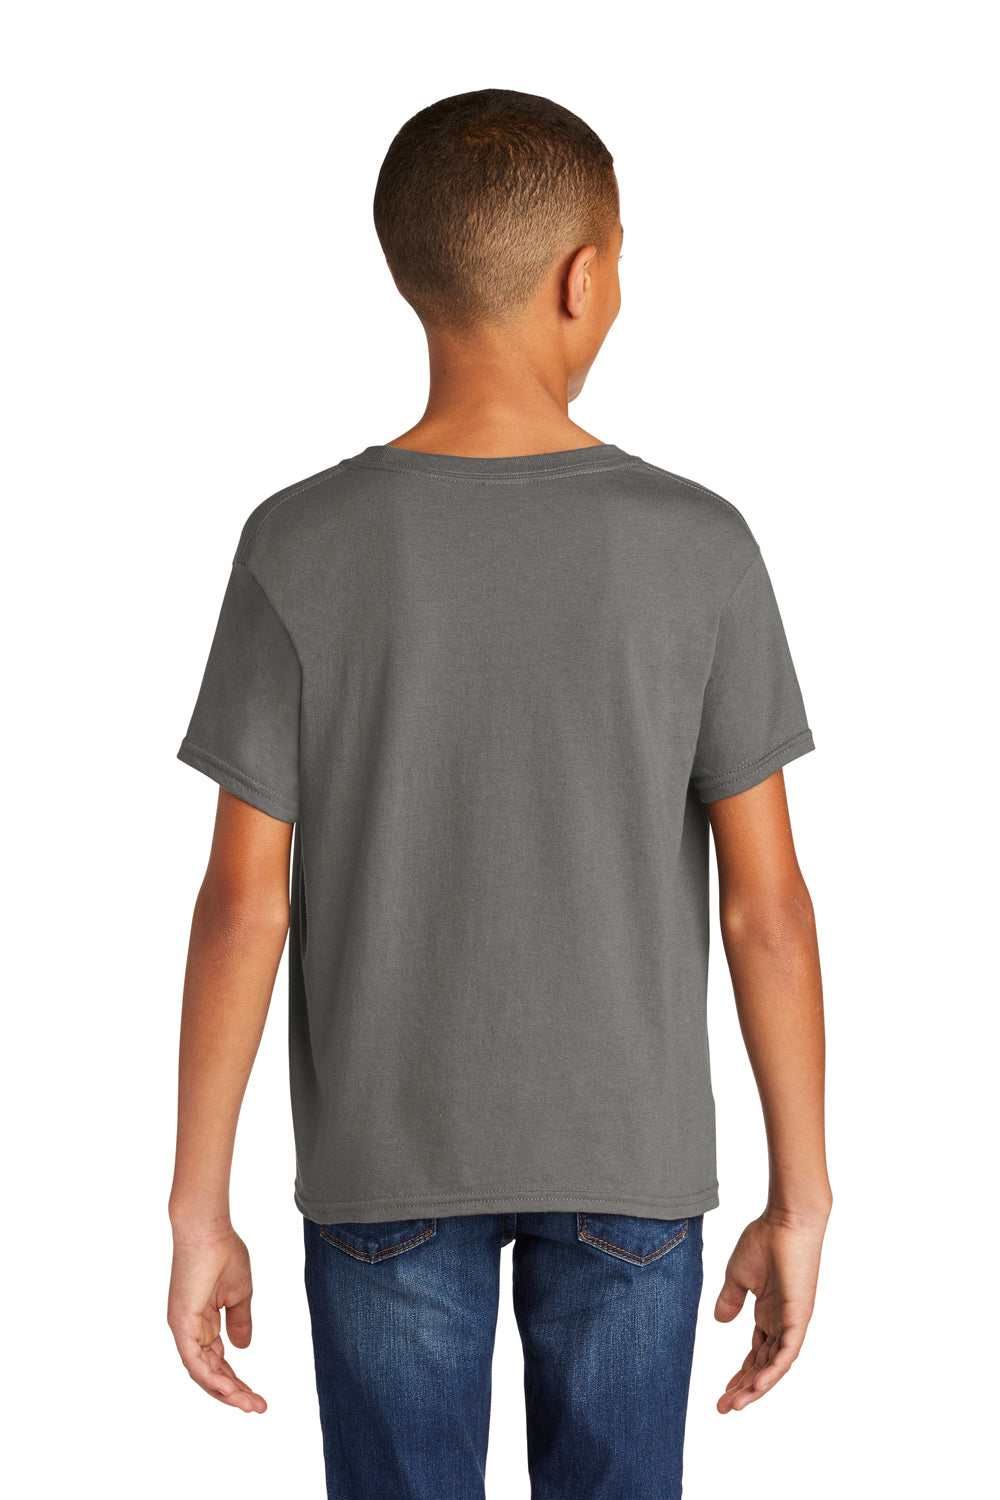 Gildan Youth Softstyle Short Sleeve Crewneck T-Shirt Charcoal Grey Back